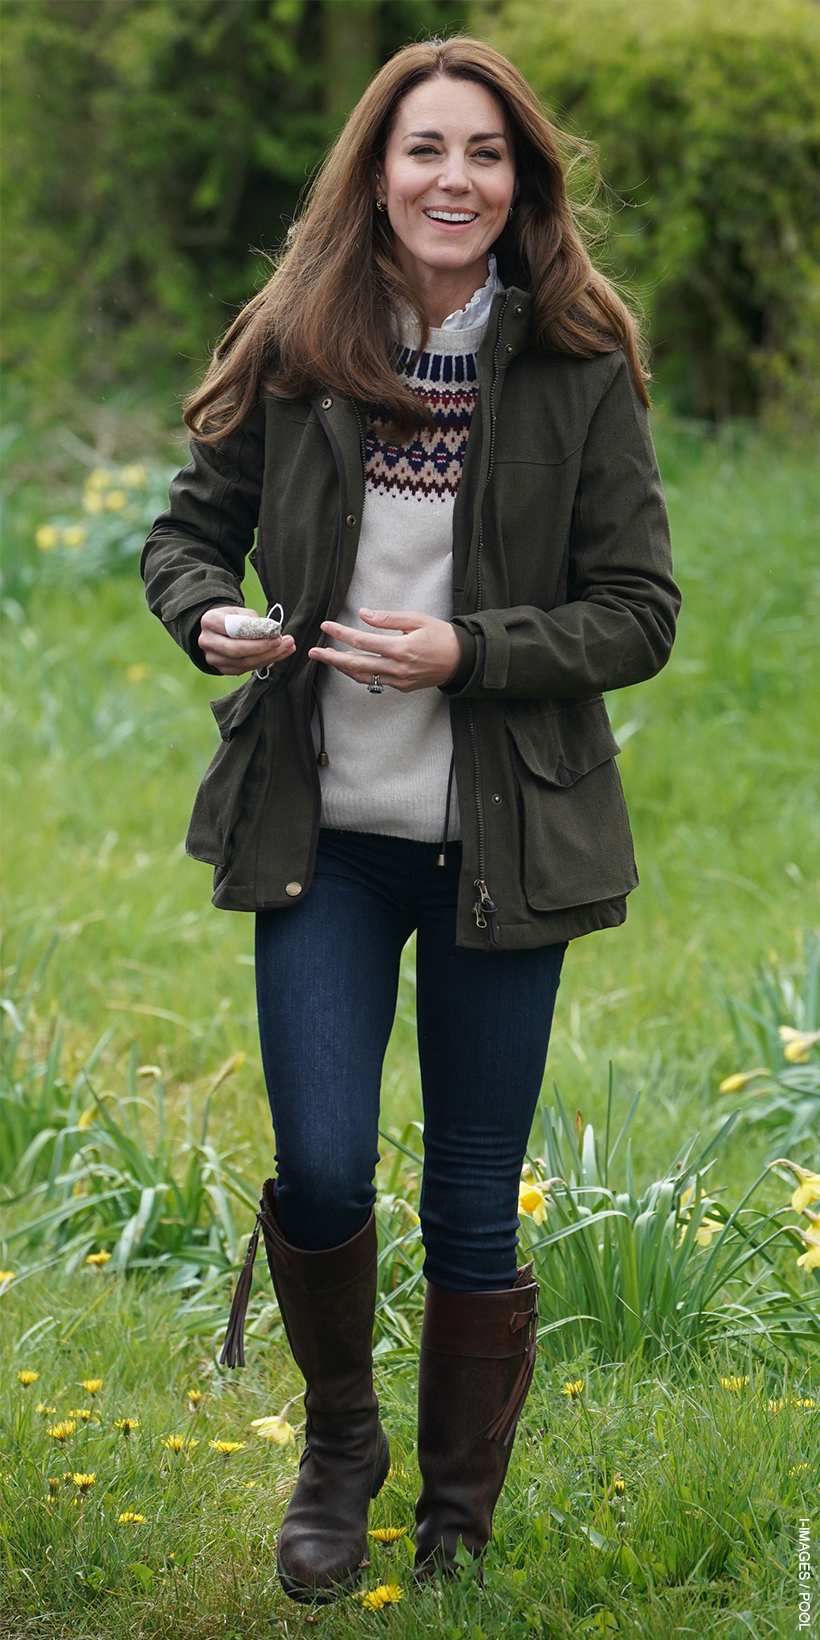 Kate Middleton wearing her Barbour jacket in spring 2021